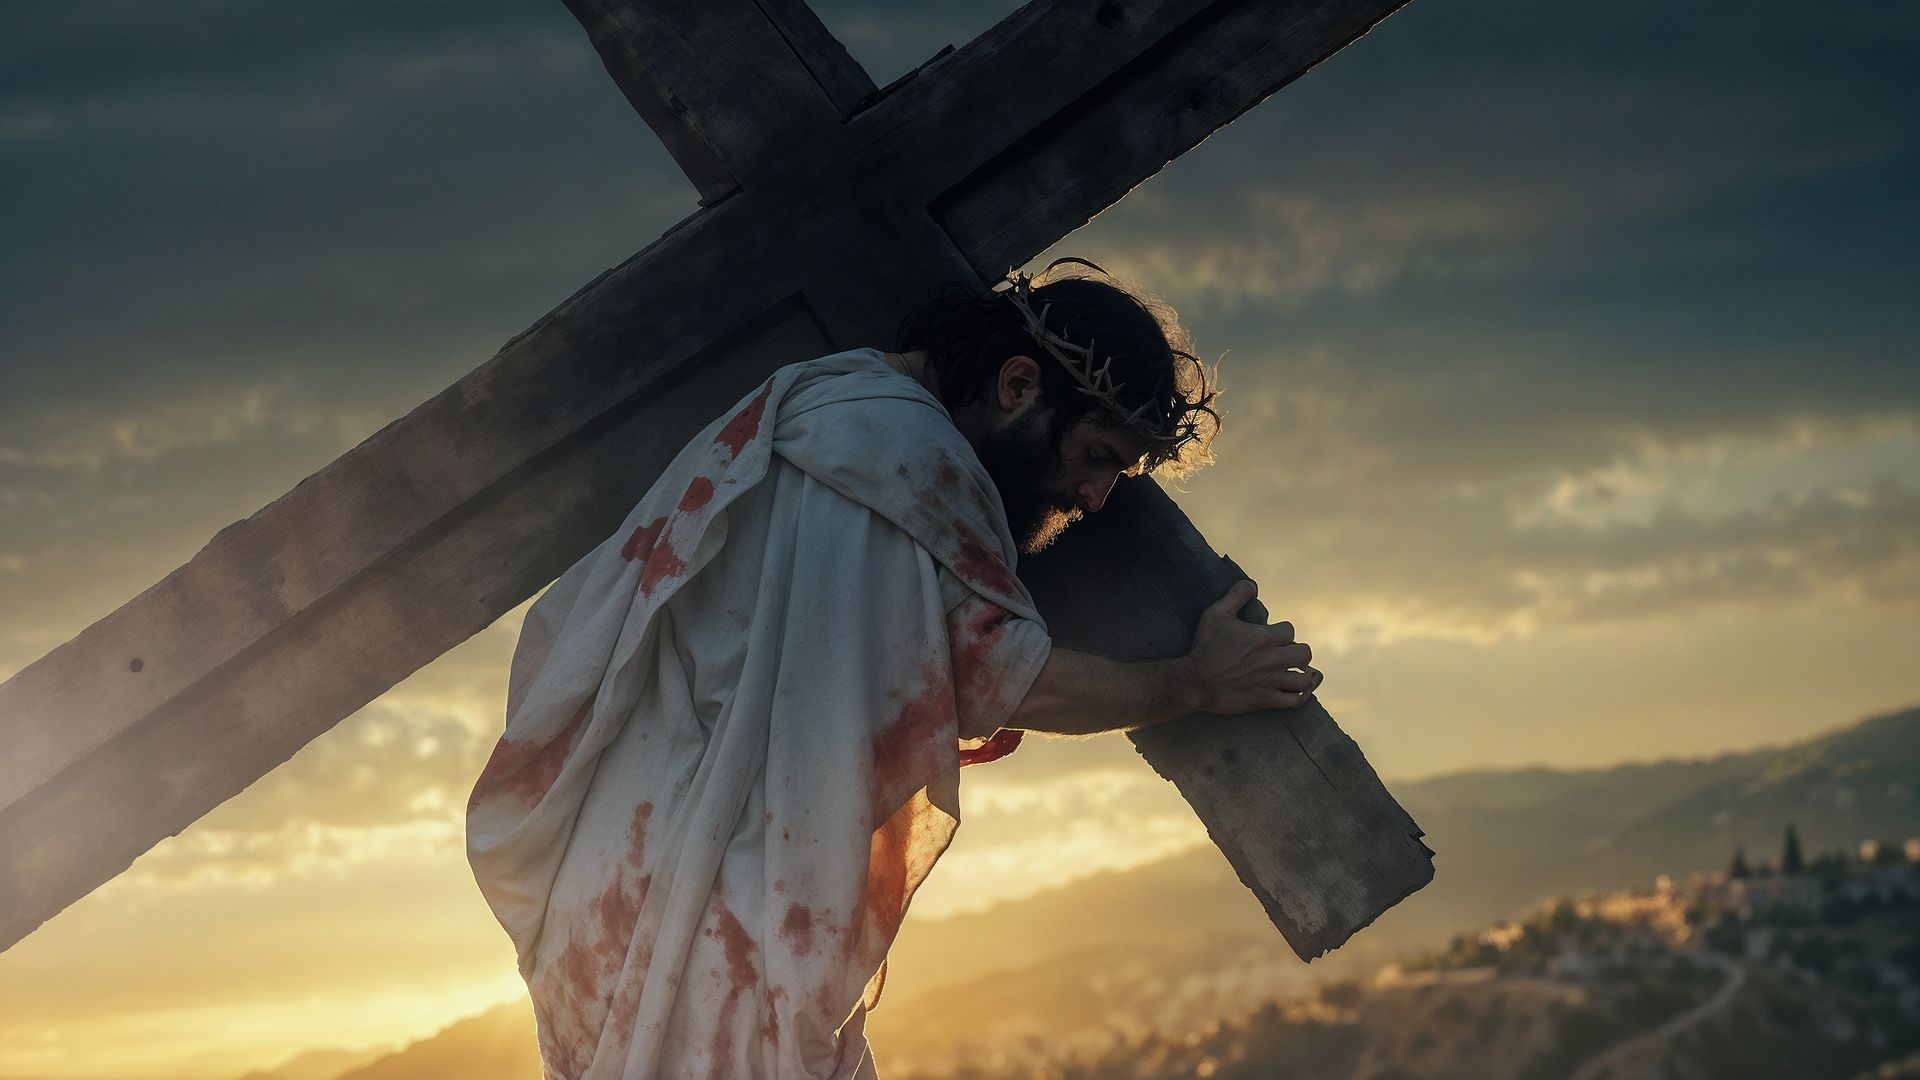 christ carrying a wooden cross